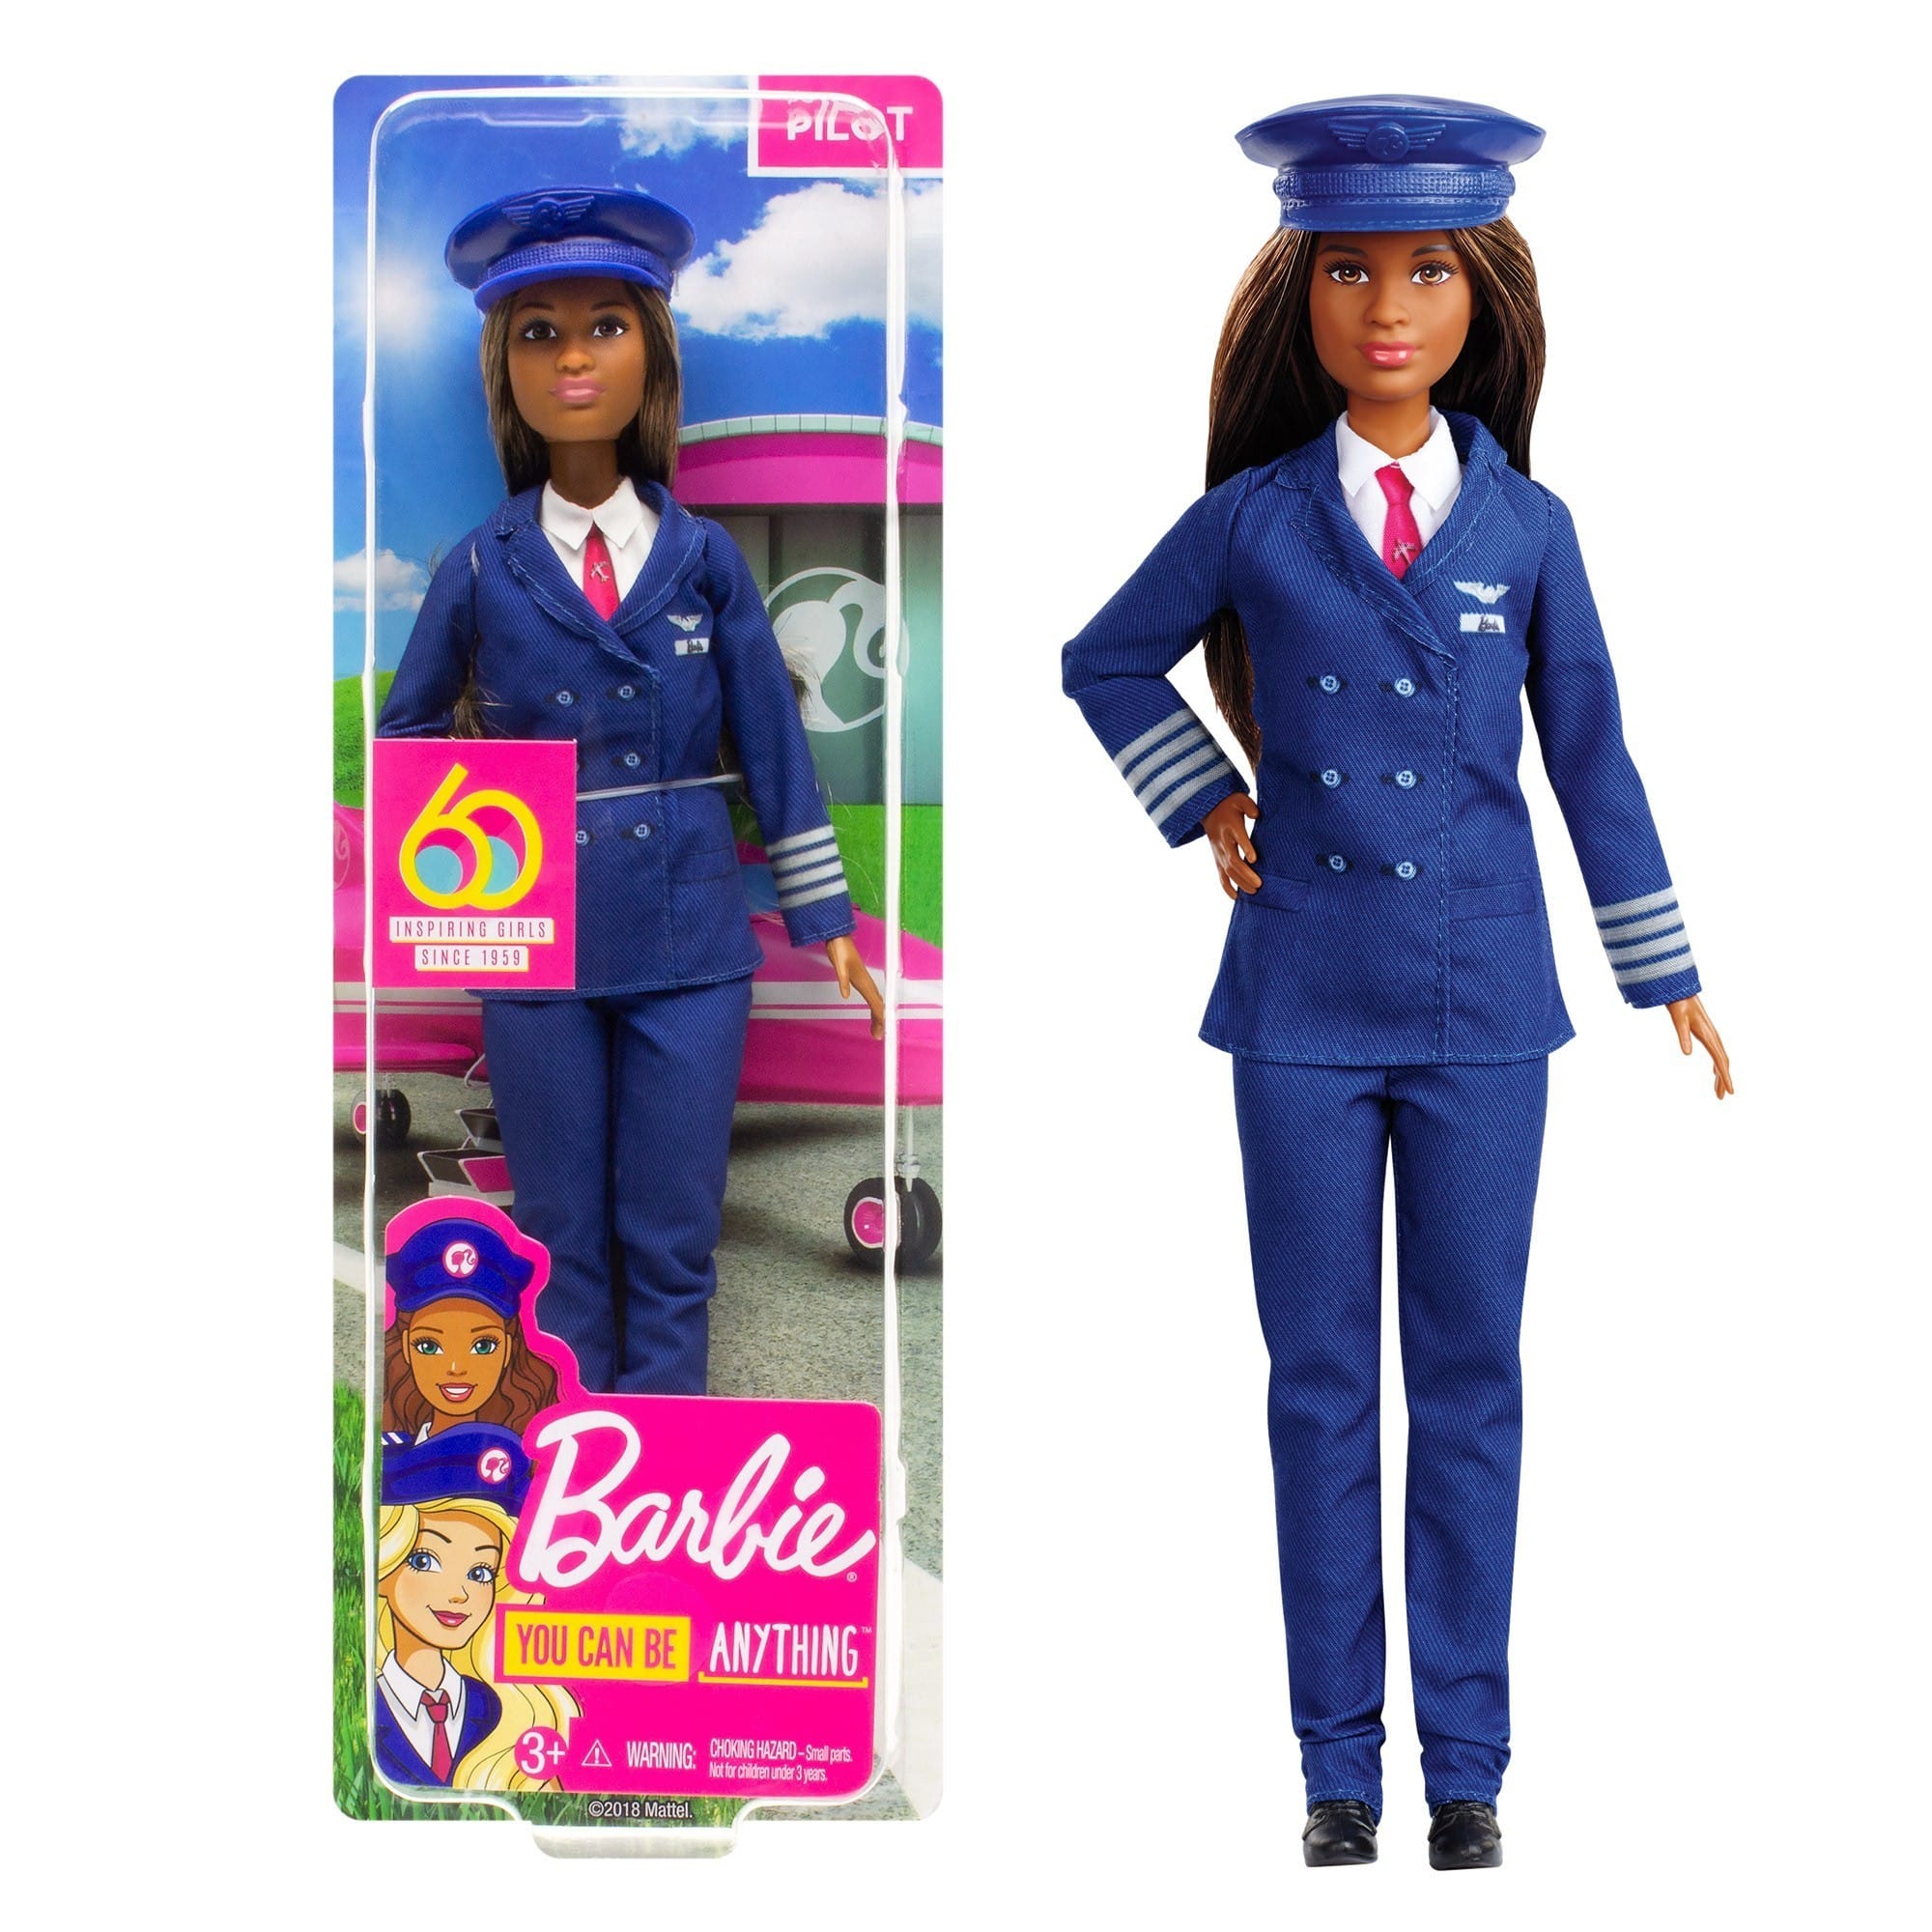 Barbie - 60th Anniversary Pilot Doll